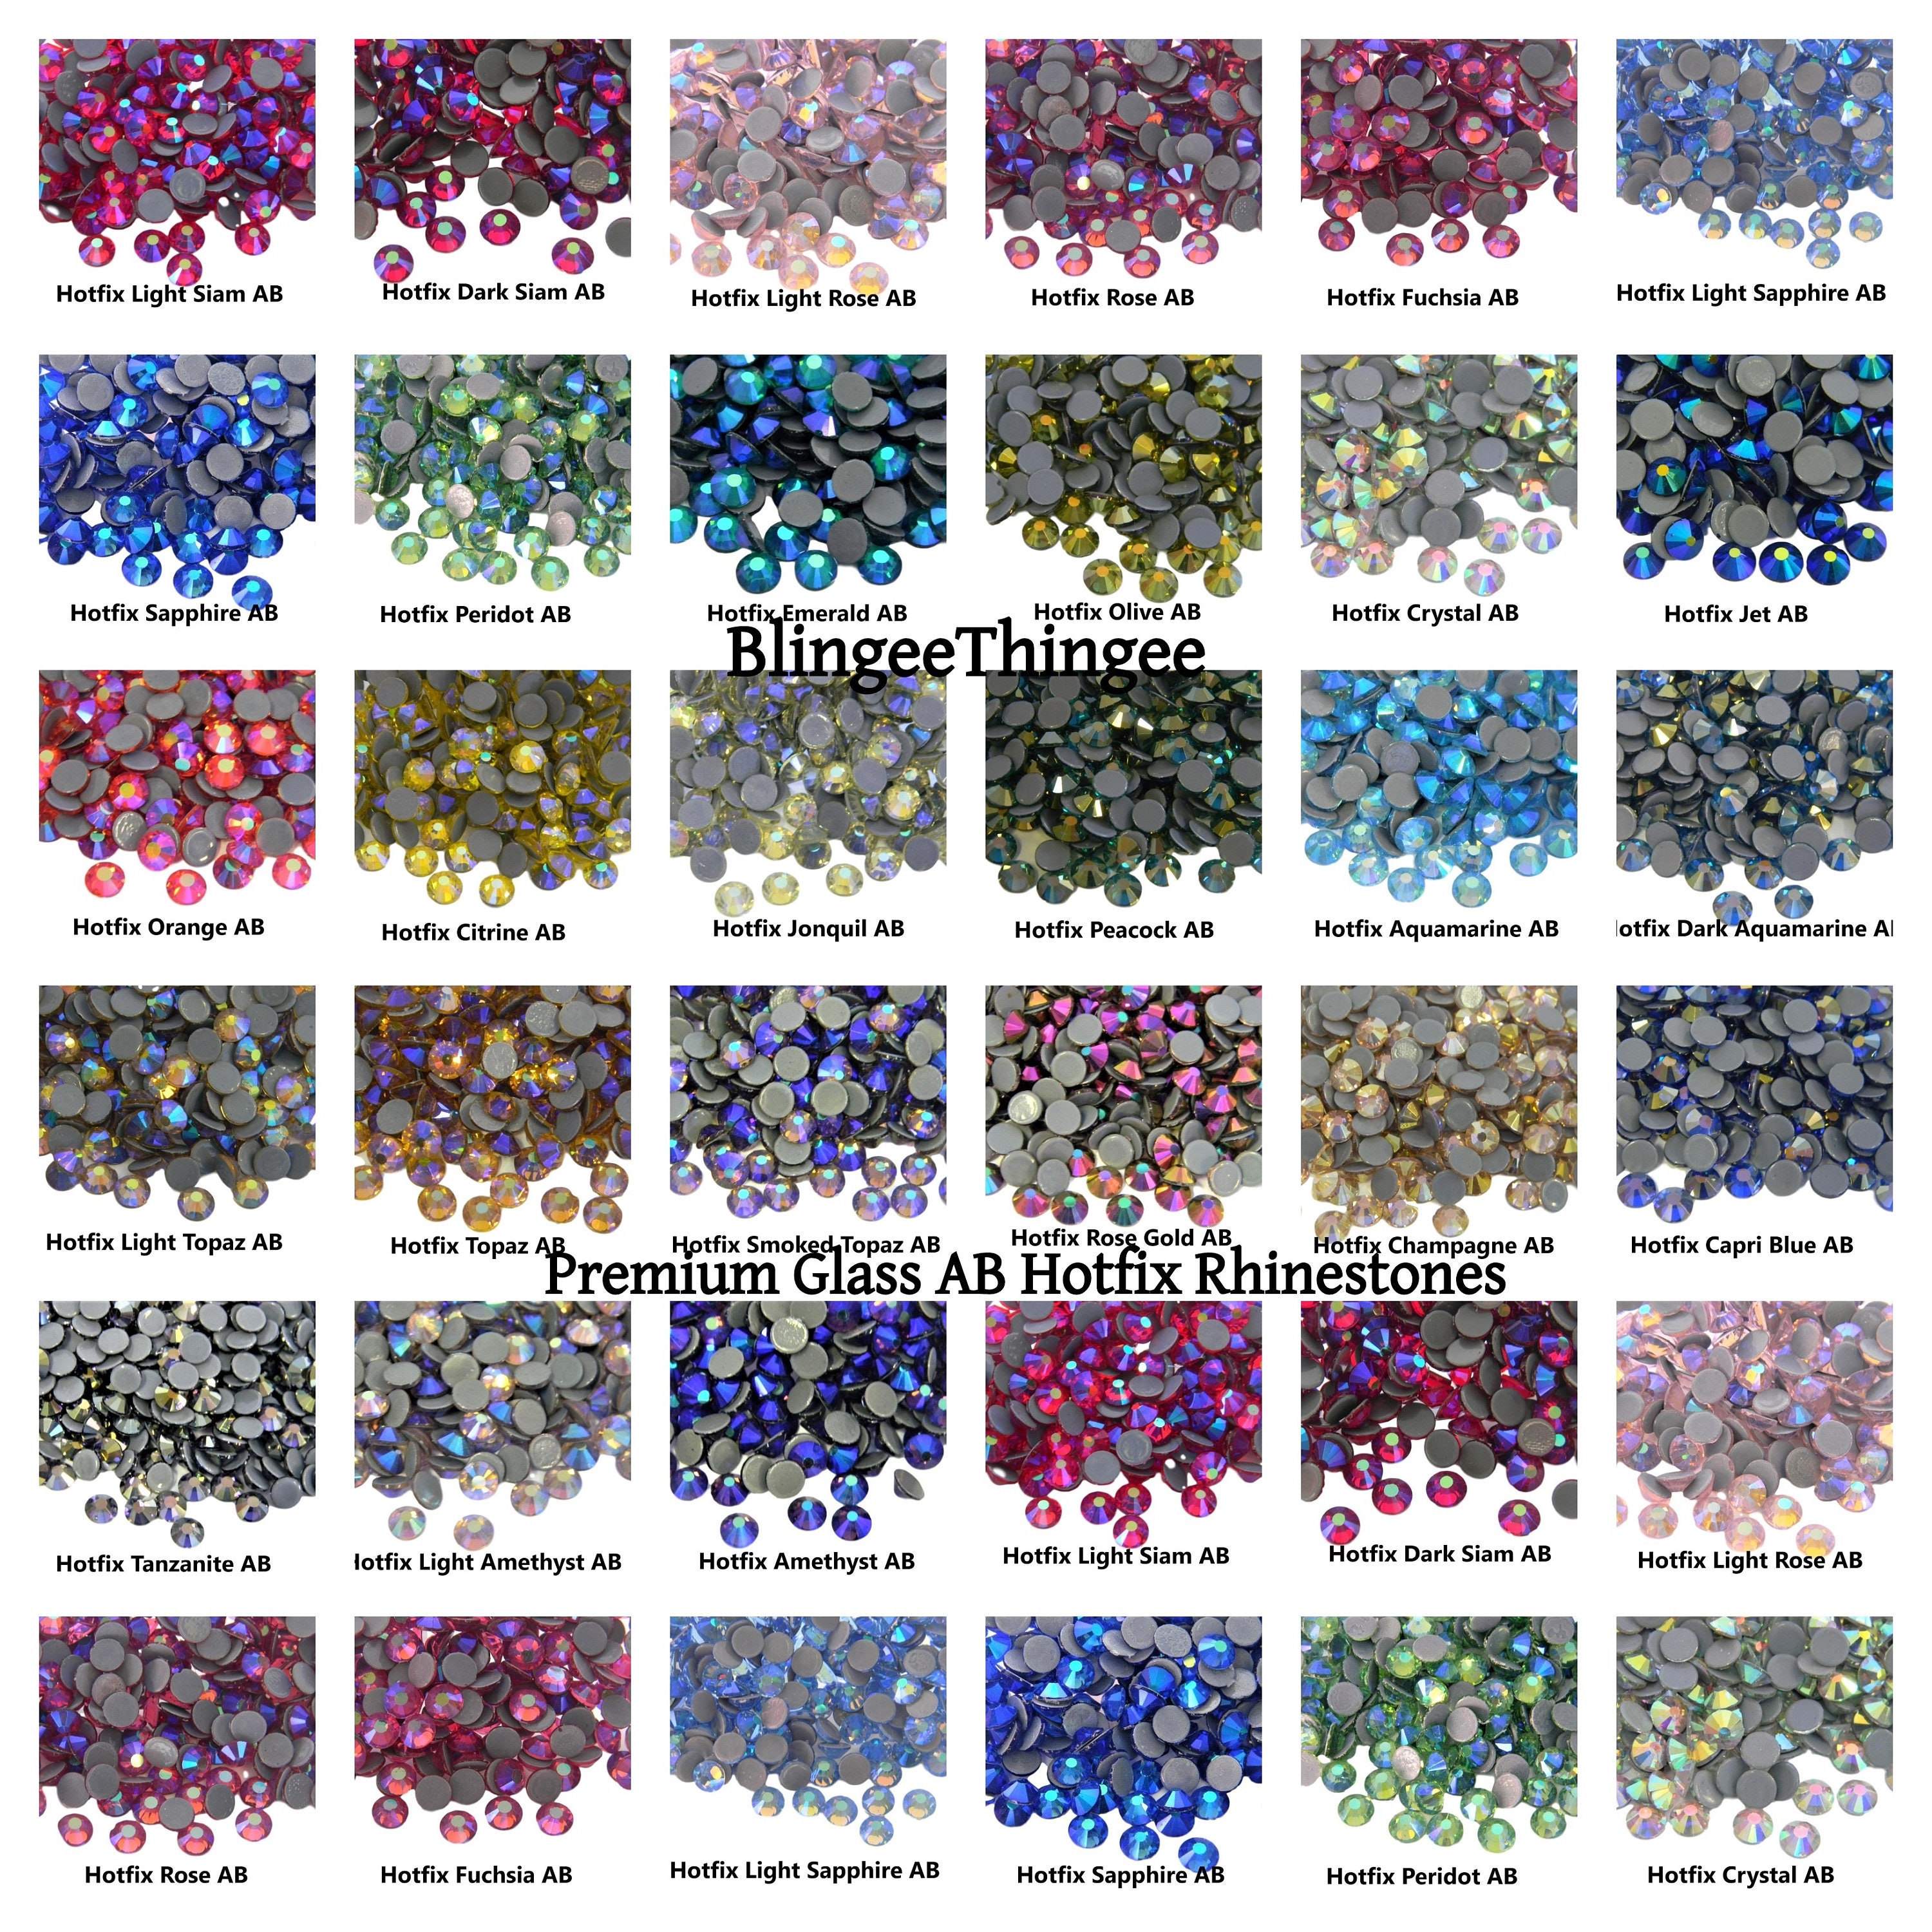 Dark Siam AB Crystal Color Rhinestone (10 Gross Pack)